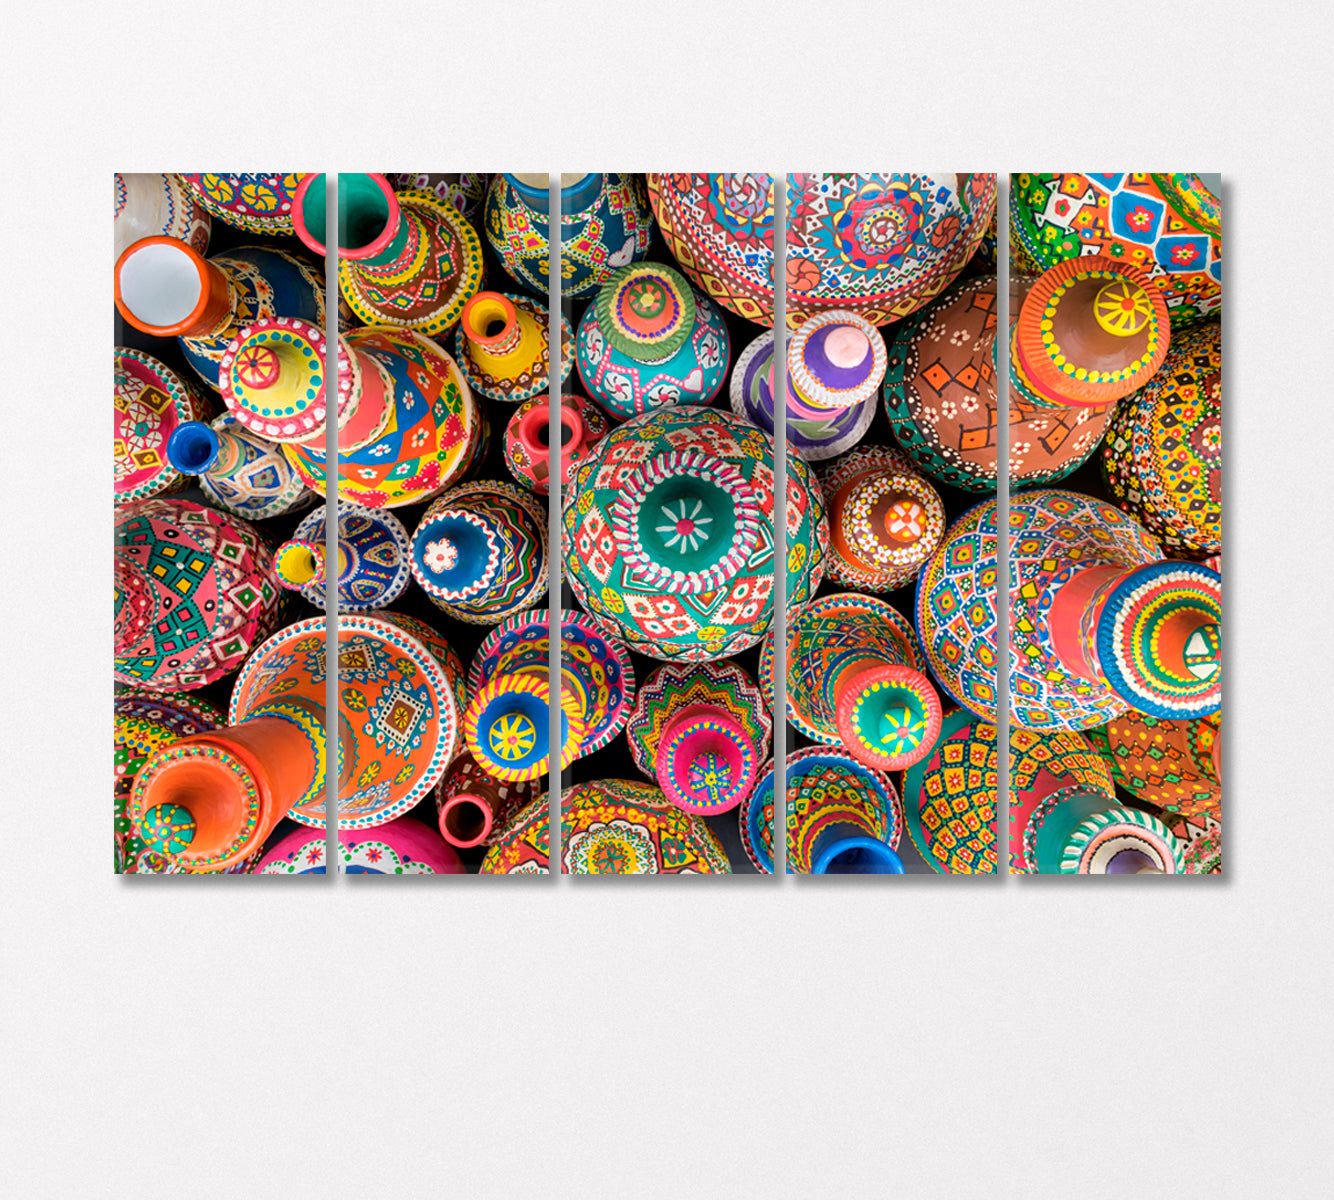 Colorful Hand Painted Ceramic Jugs Canvas Print-Canvas Print-CetArt-5 Panels-36x24 inches-CetArt